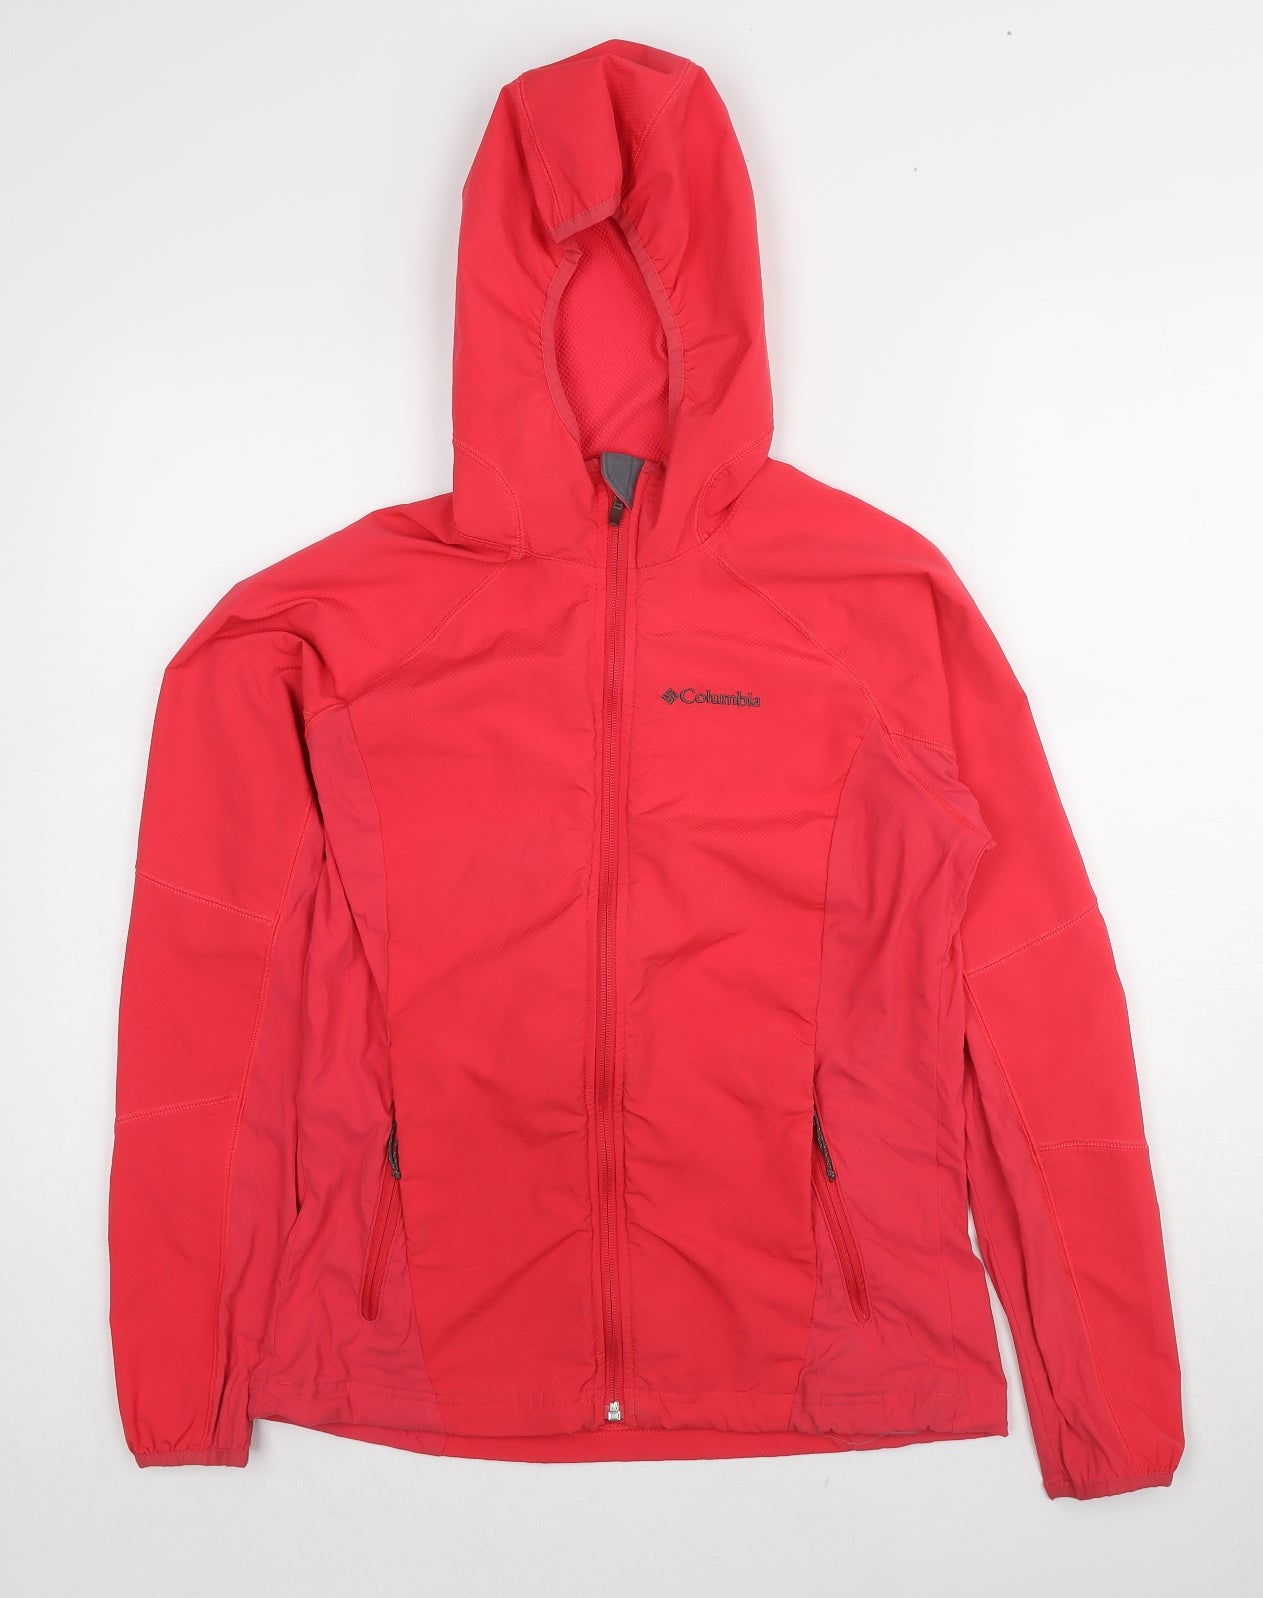 Columbia Womens Pink Jacket Size M Zip